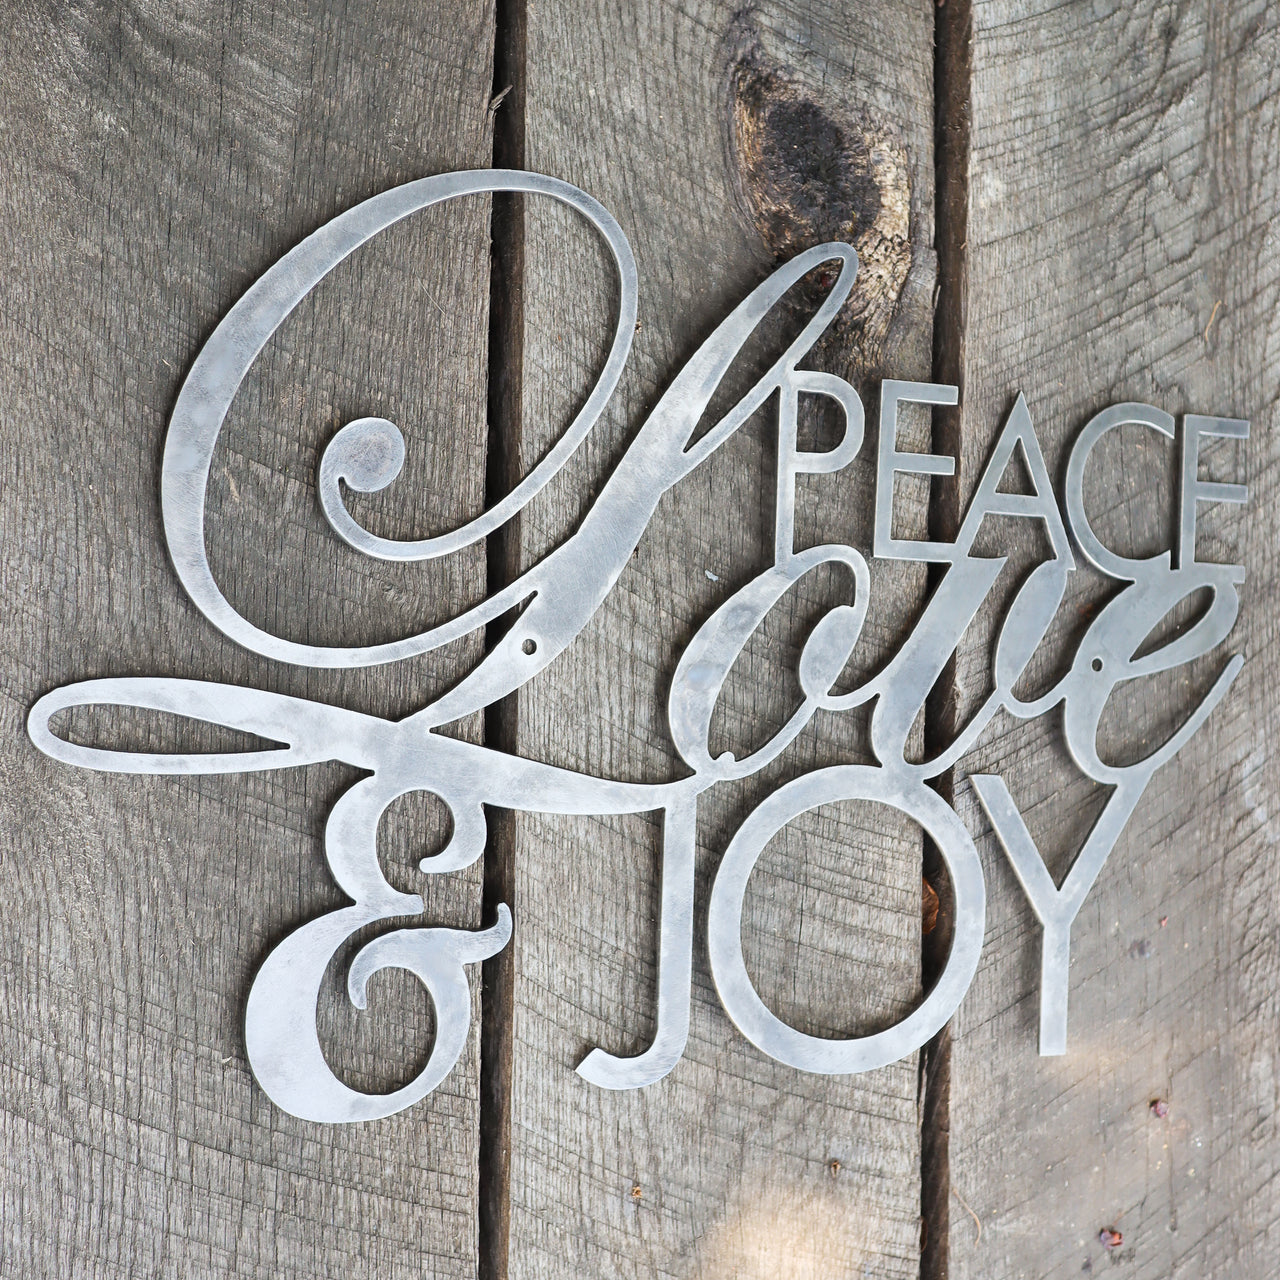 Peace Love & Joy - Holiday Metal Sign - Inspirational Home Decor